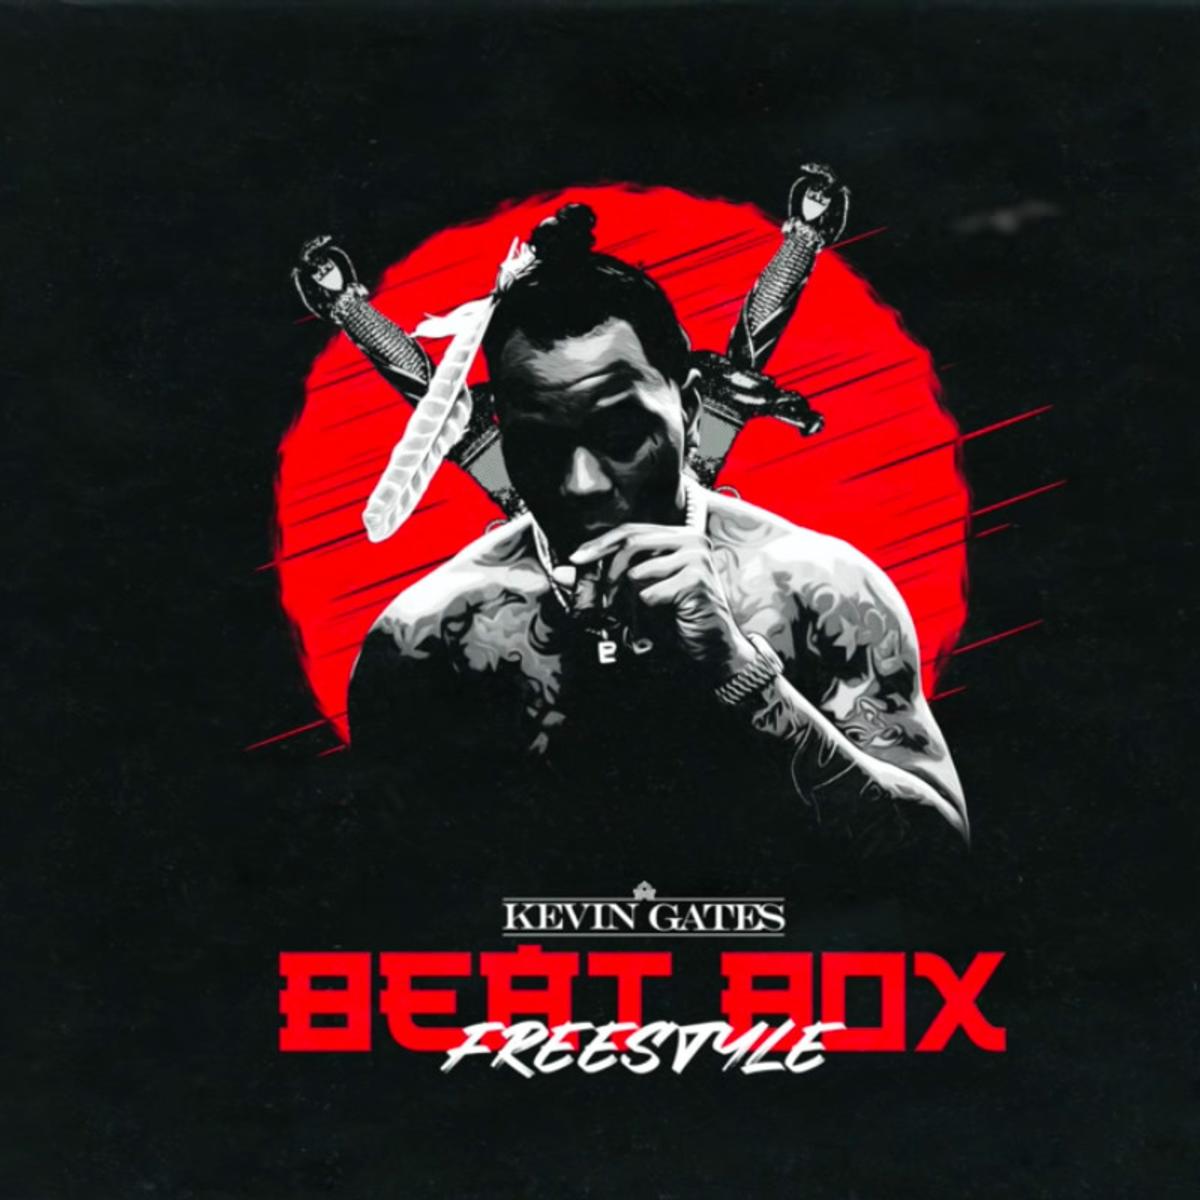 Kevin Gates - Beat Box Freestyle